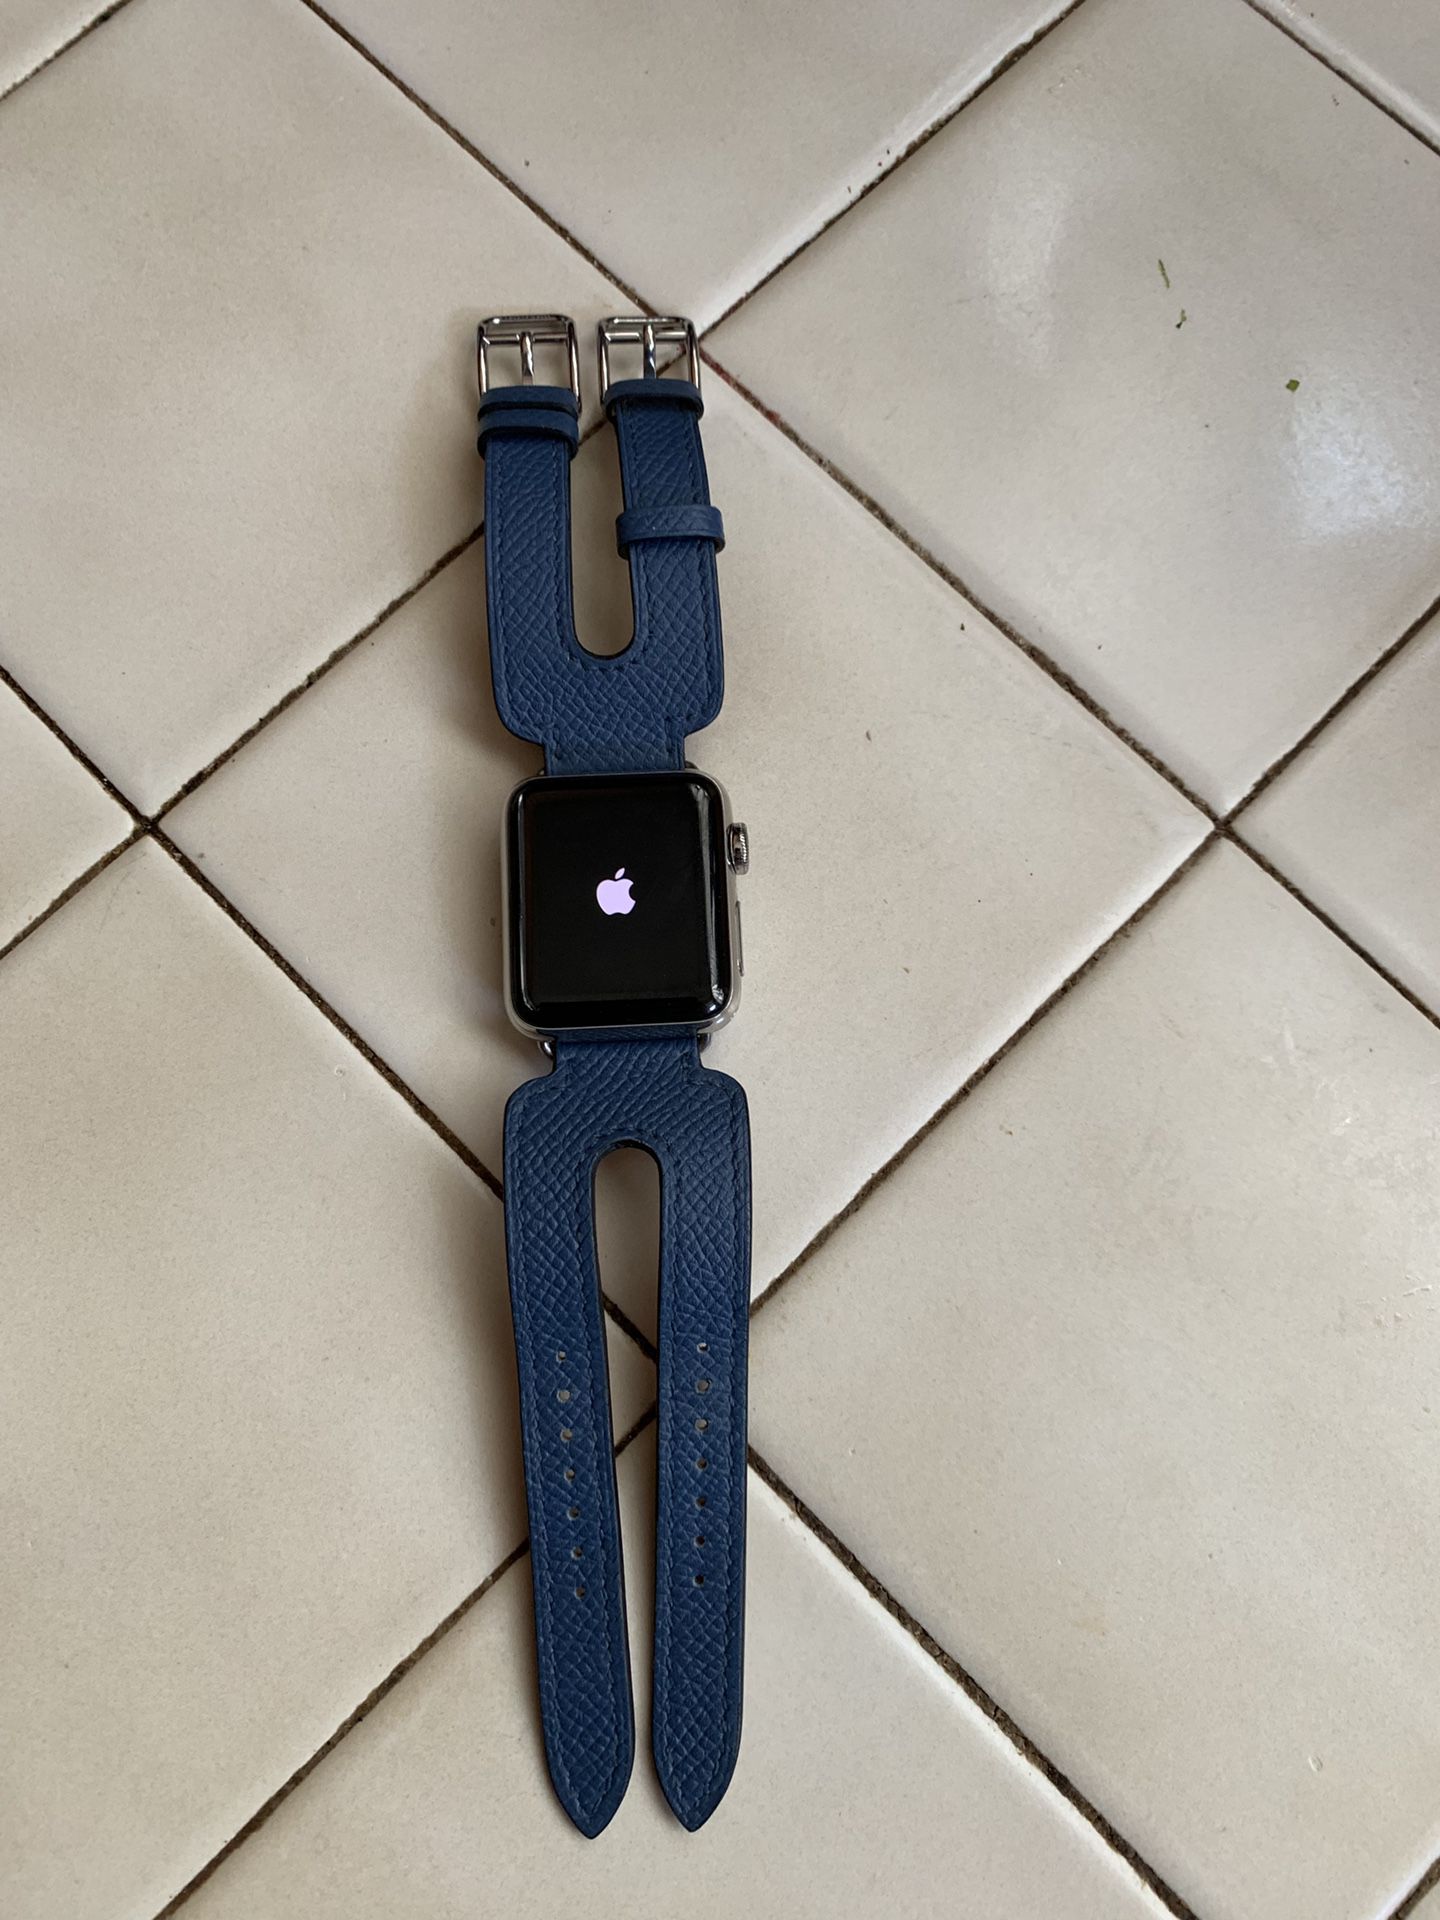 Apple Watch Series II w/ Hermès Dual Leather Band!